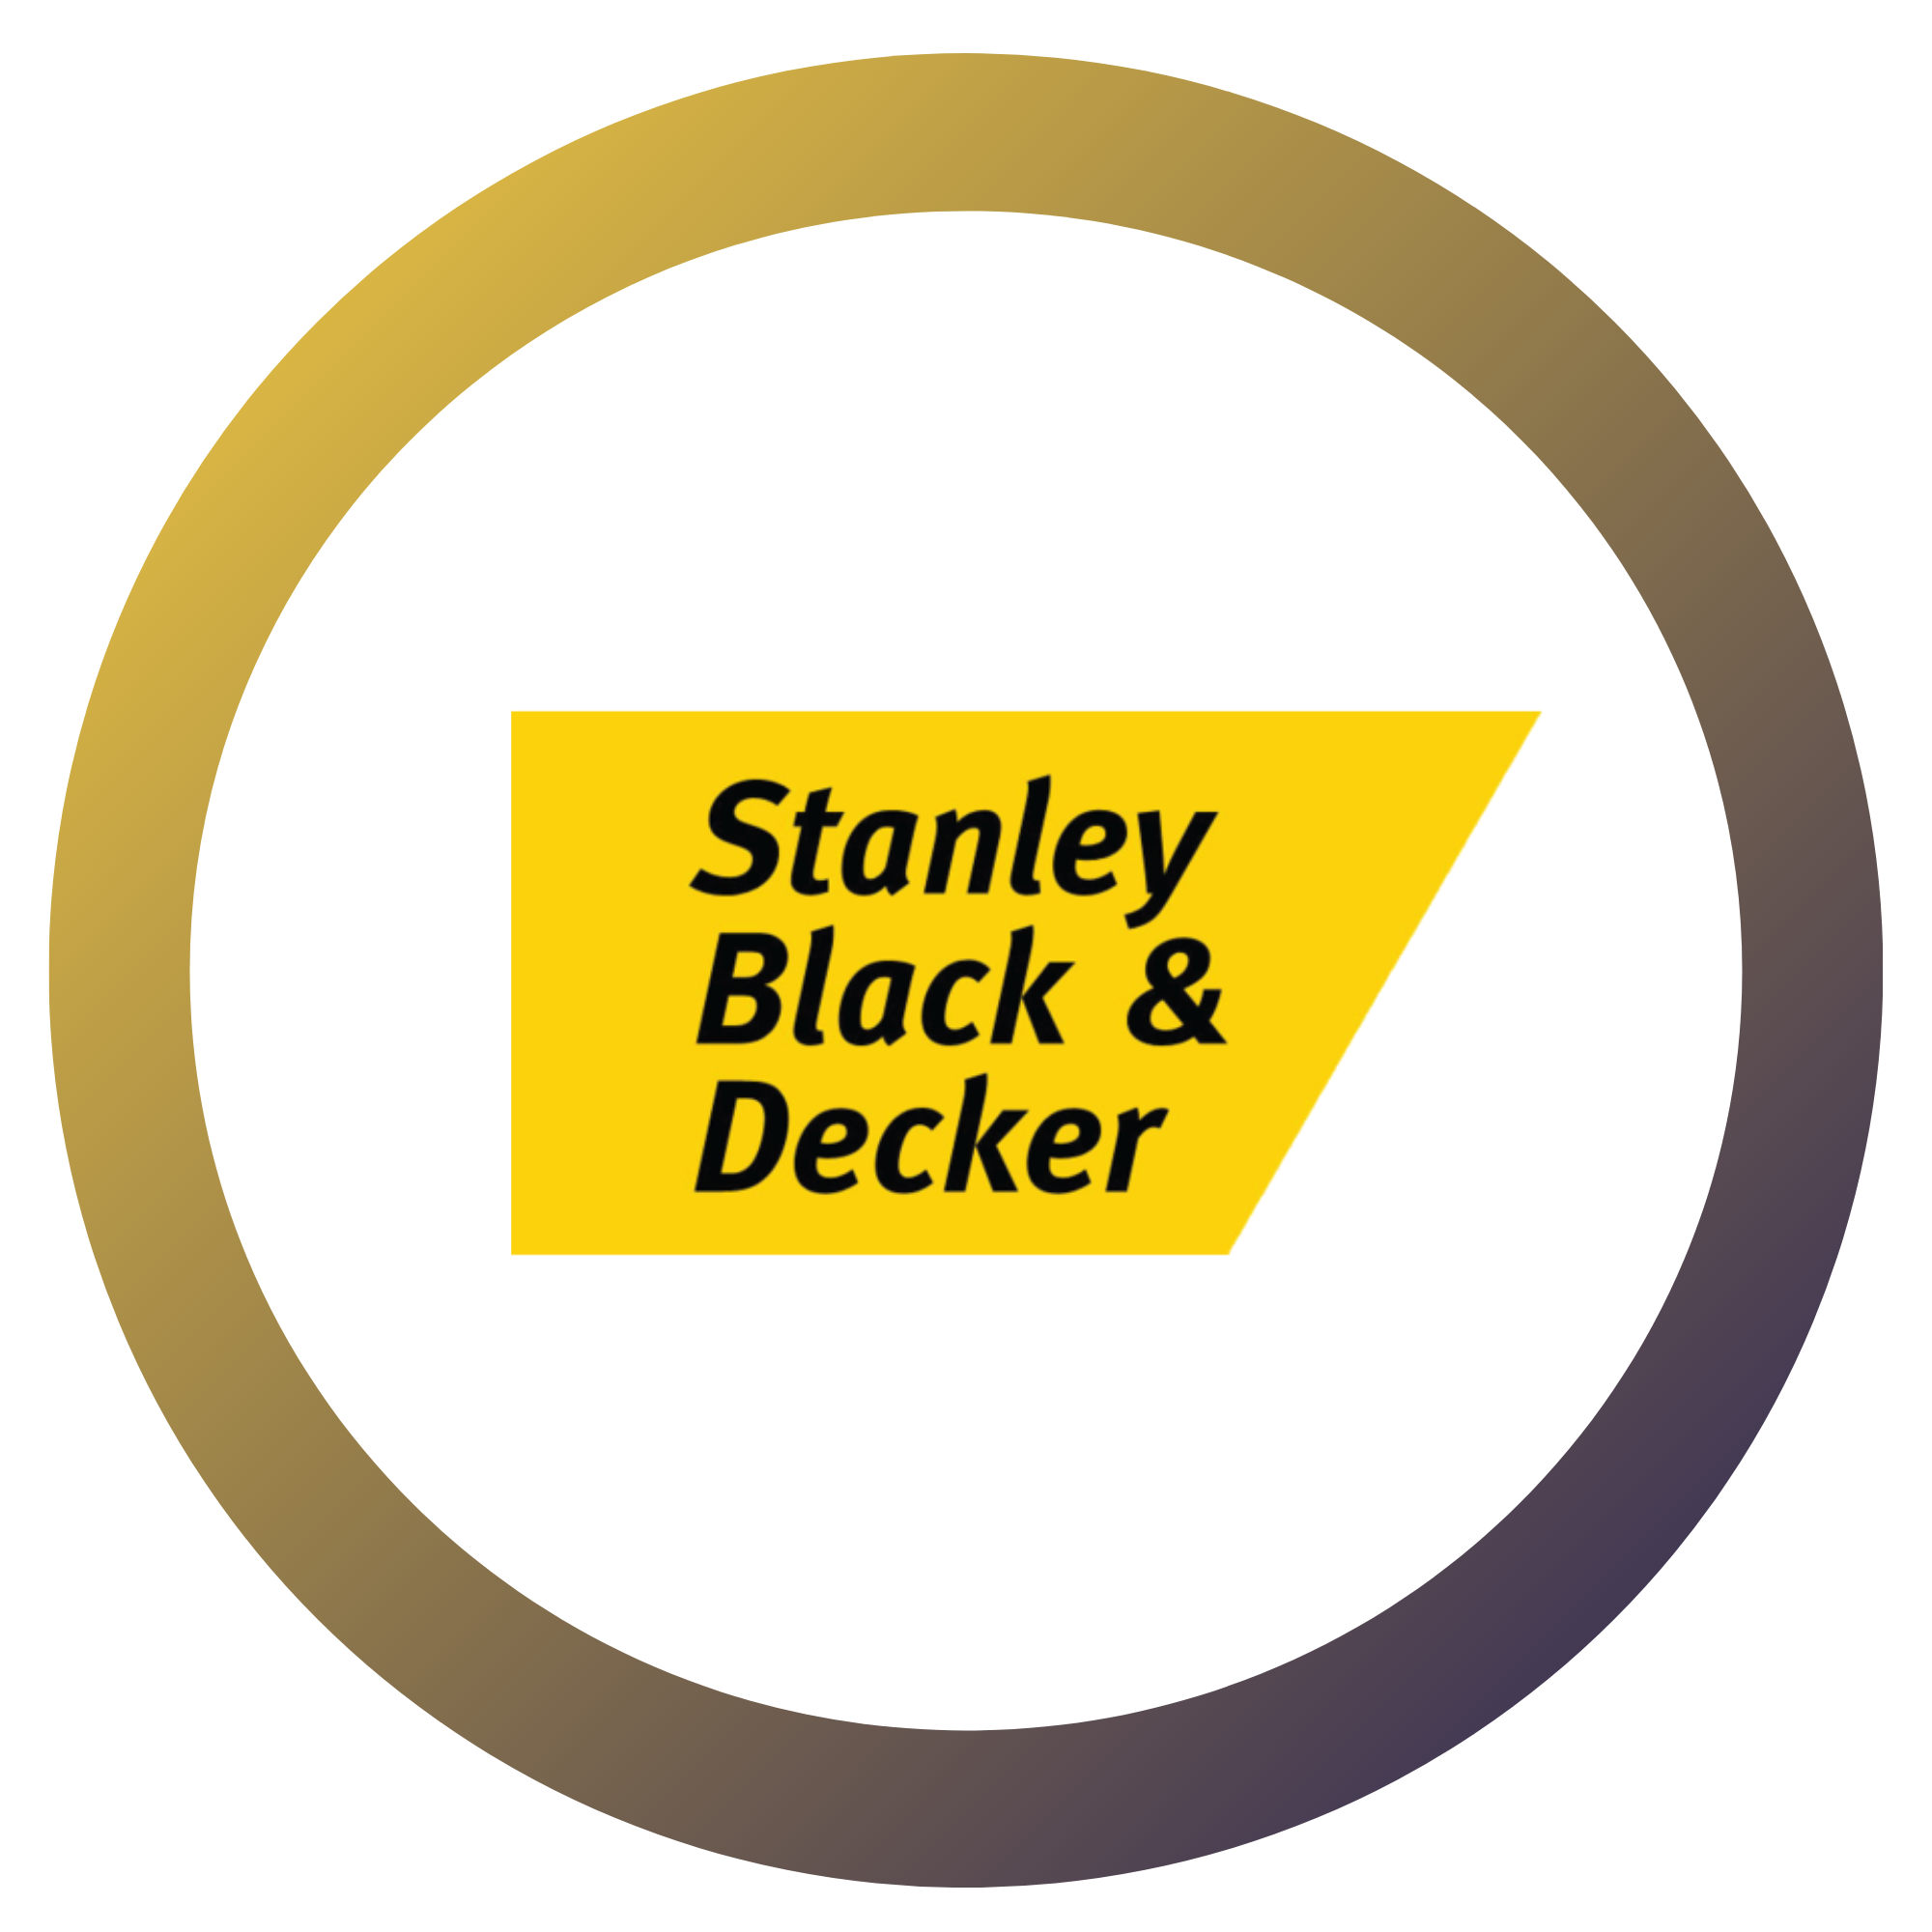 Stanley Black & Decker is a Campus Forward Award Winner